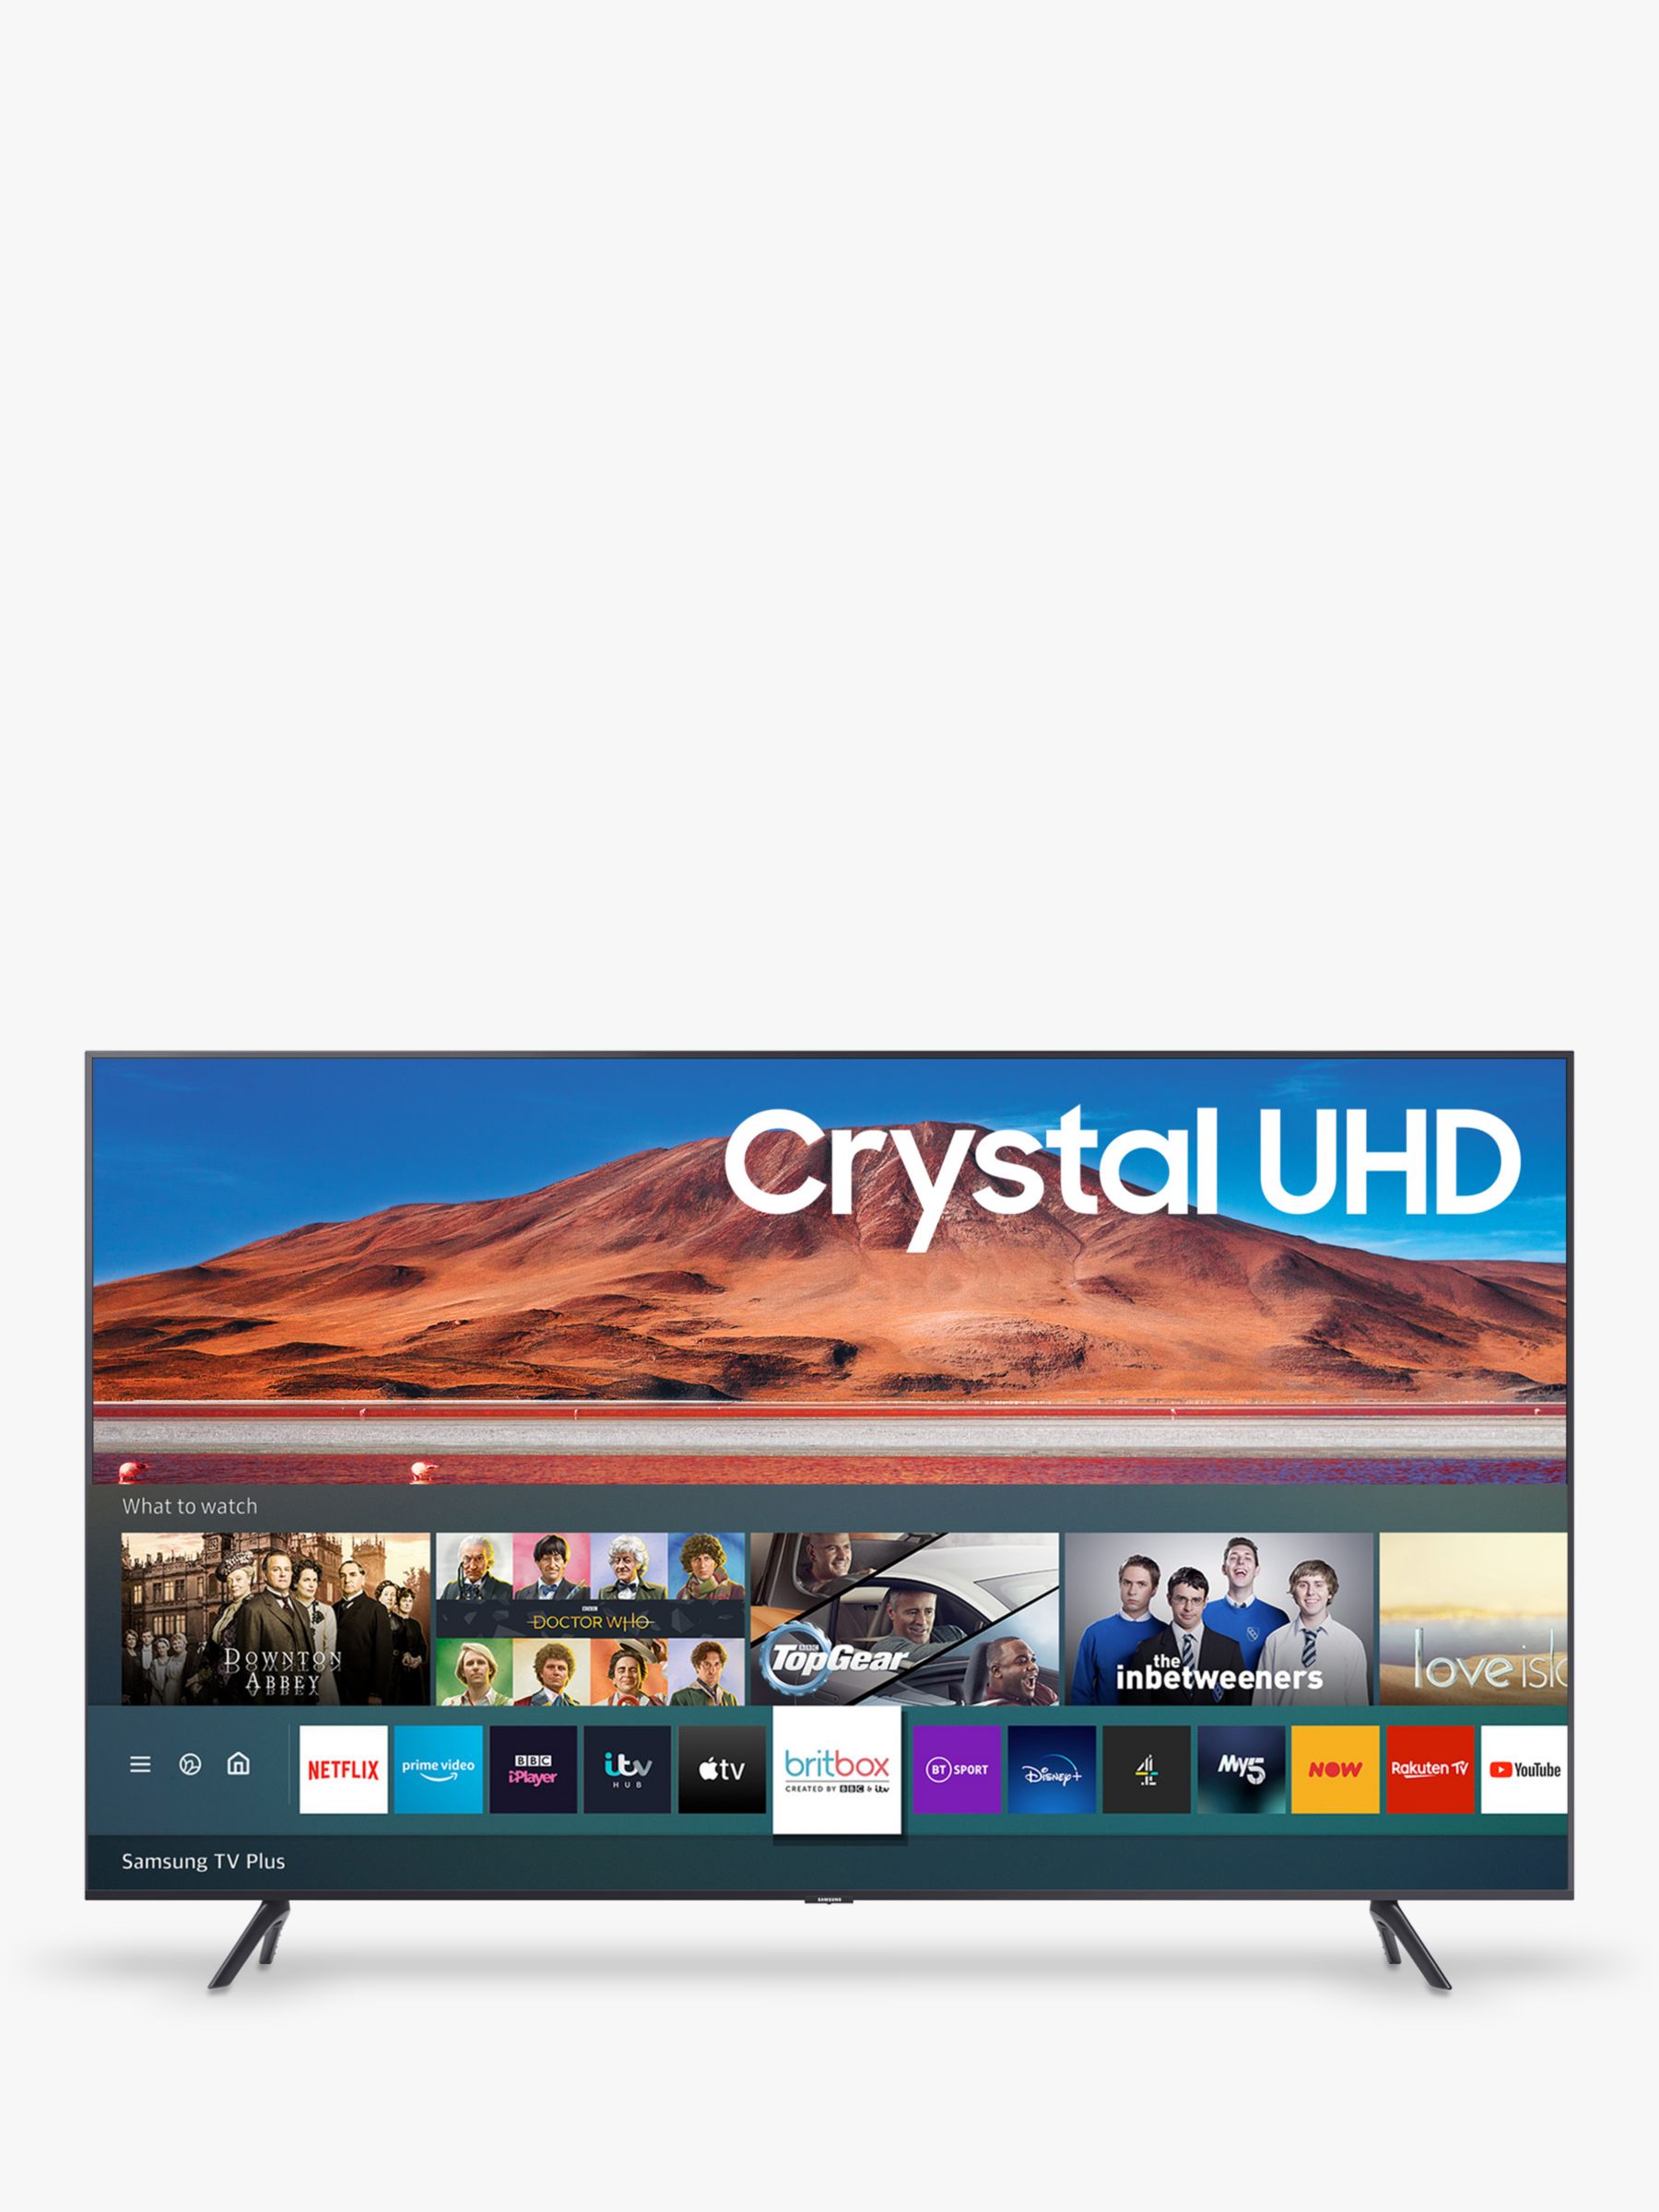 Samsung UE55TU7100 (2020) HDR 4K Ultra HD Smart TV, 55 inch with TVPlus, Carbon Silver